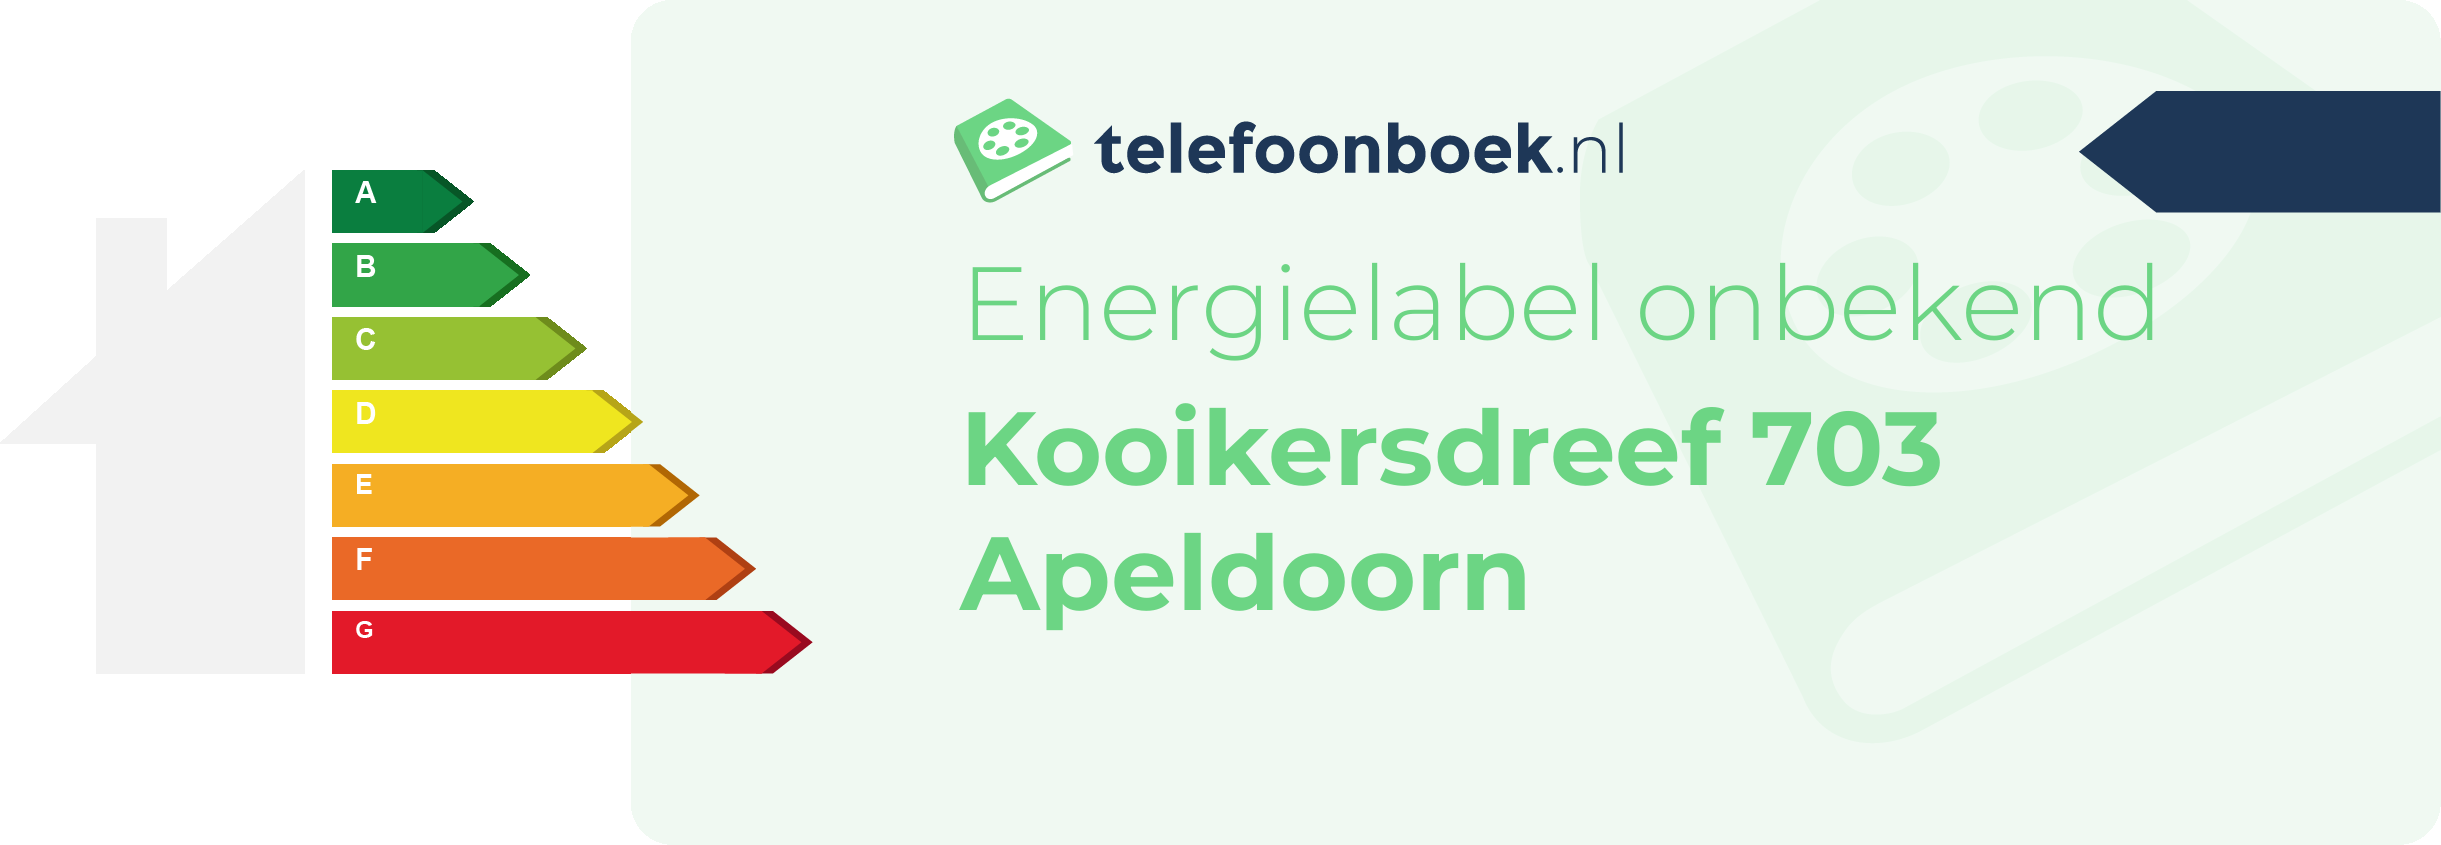 Energielabel Kooikersdreef 703 Apeldoorn